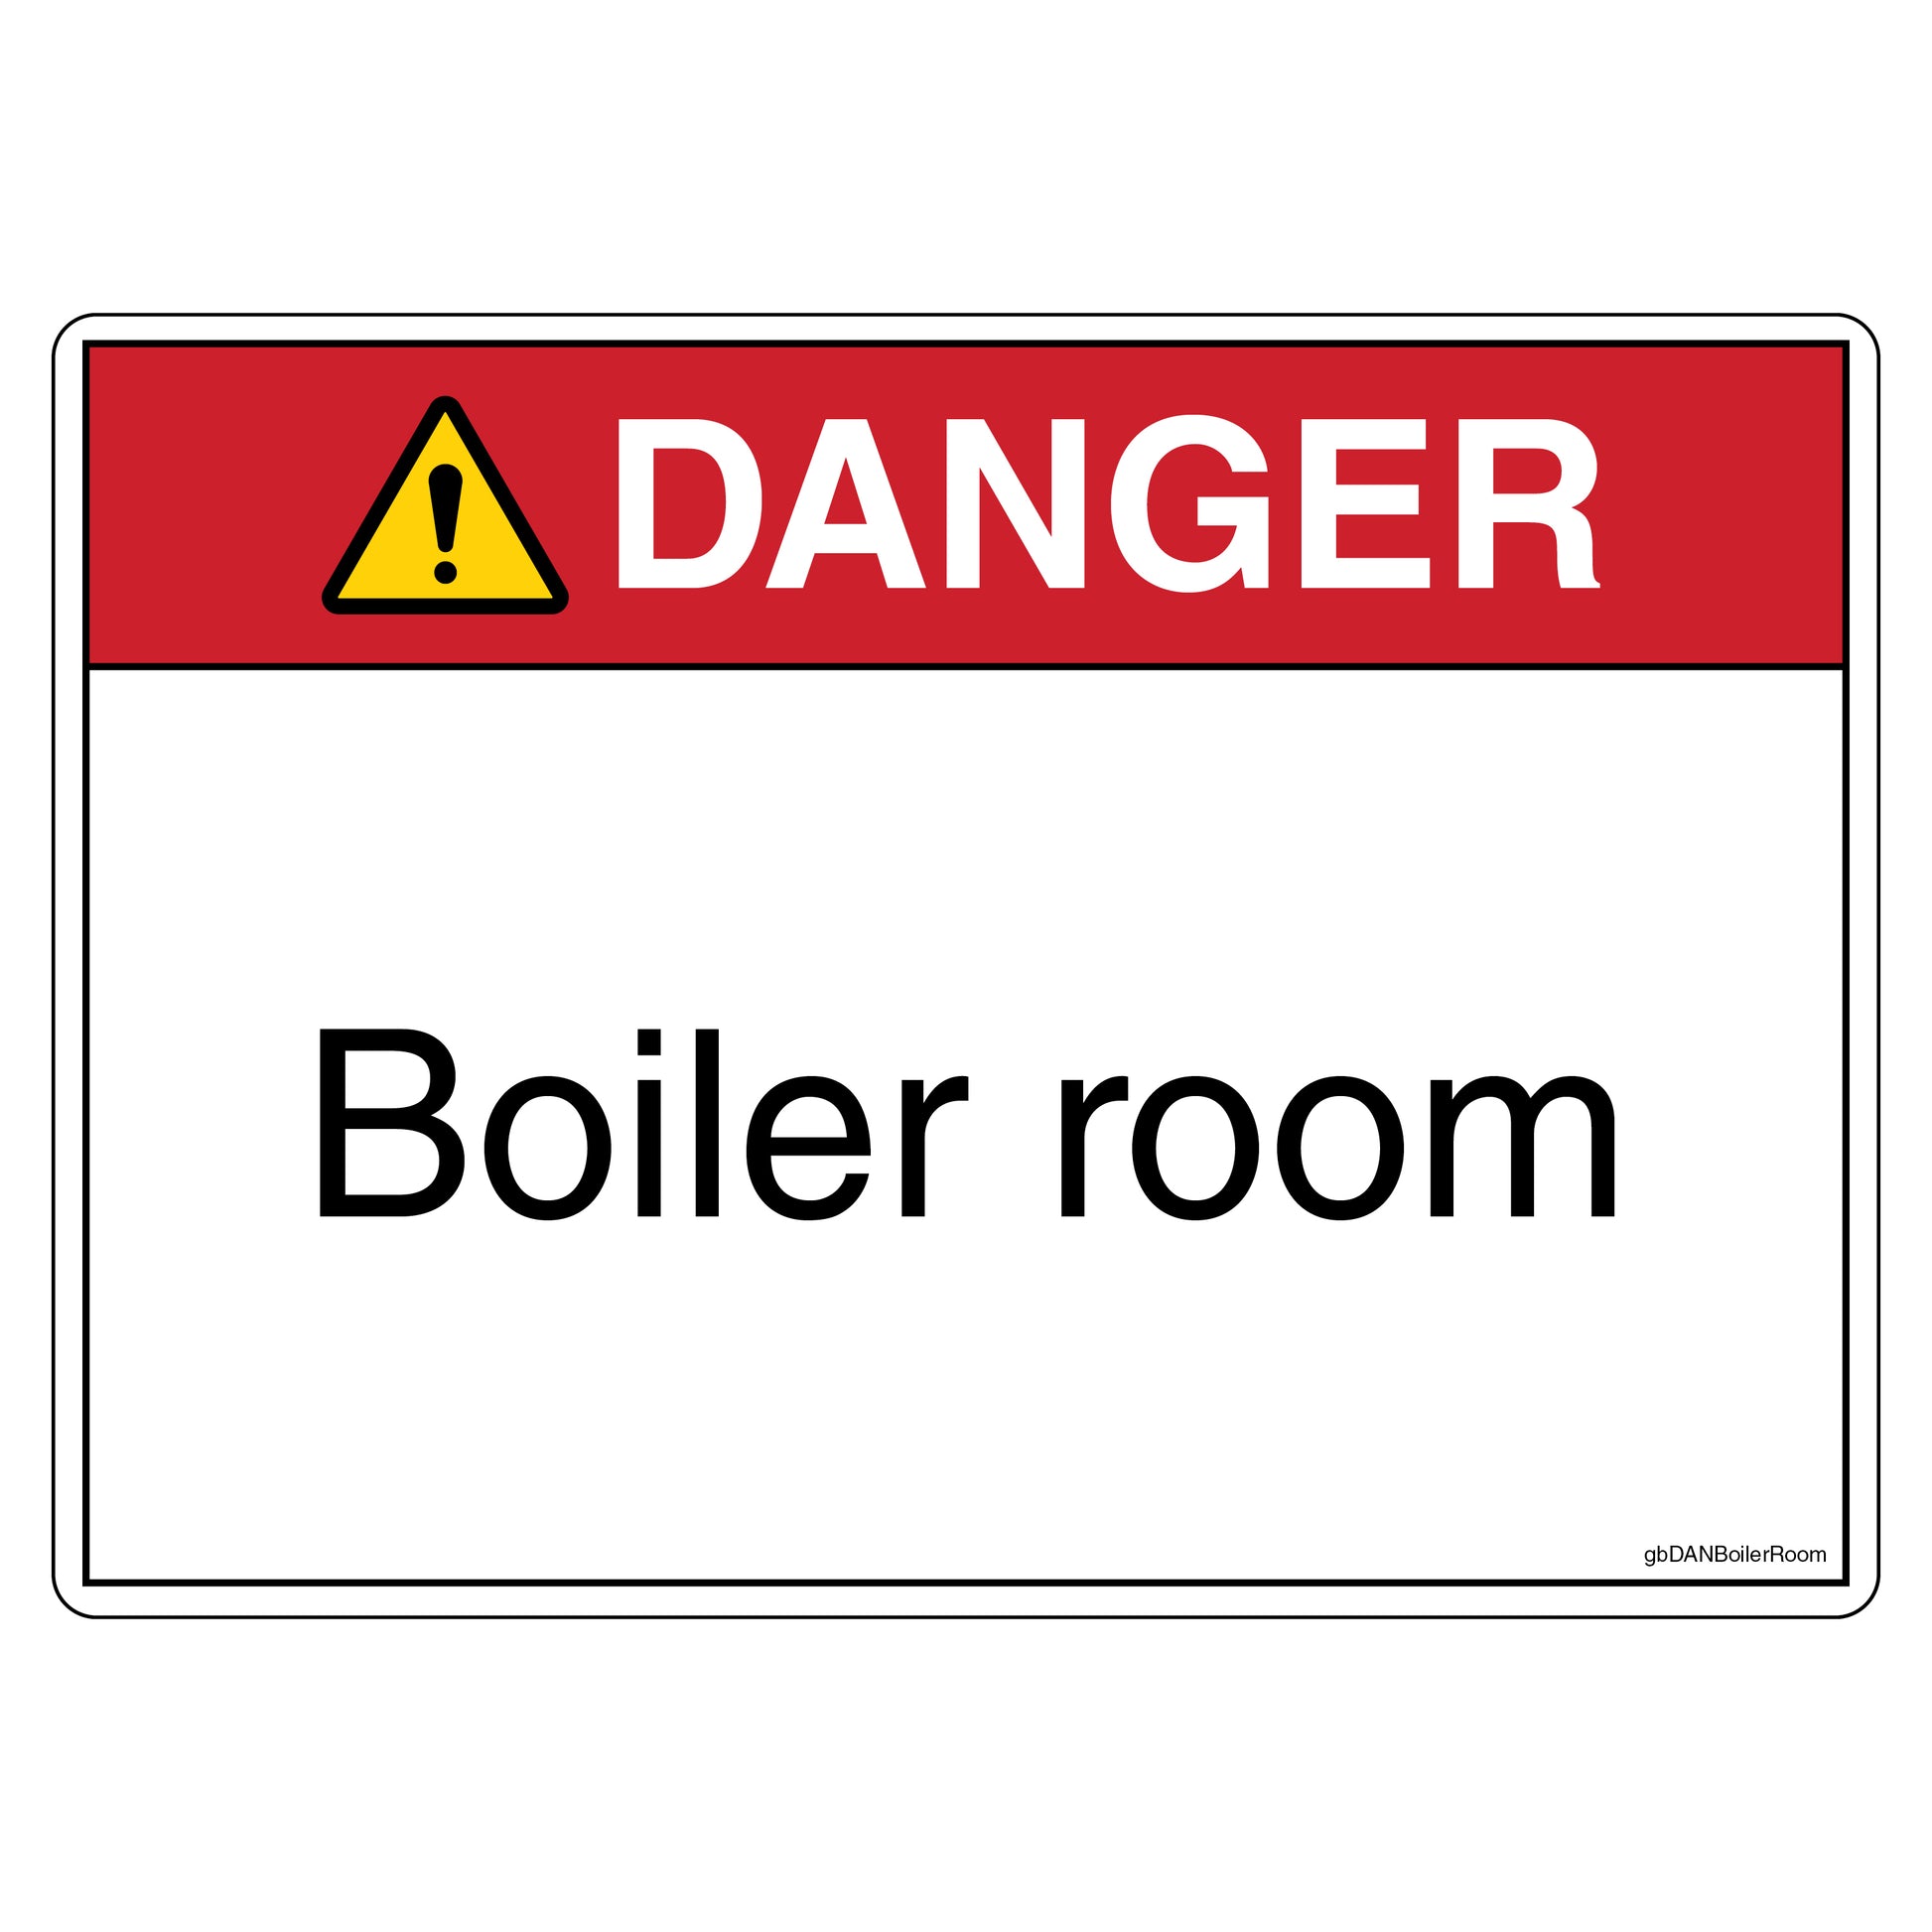 Danger Boiler Room Decal.